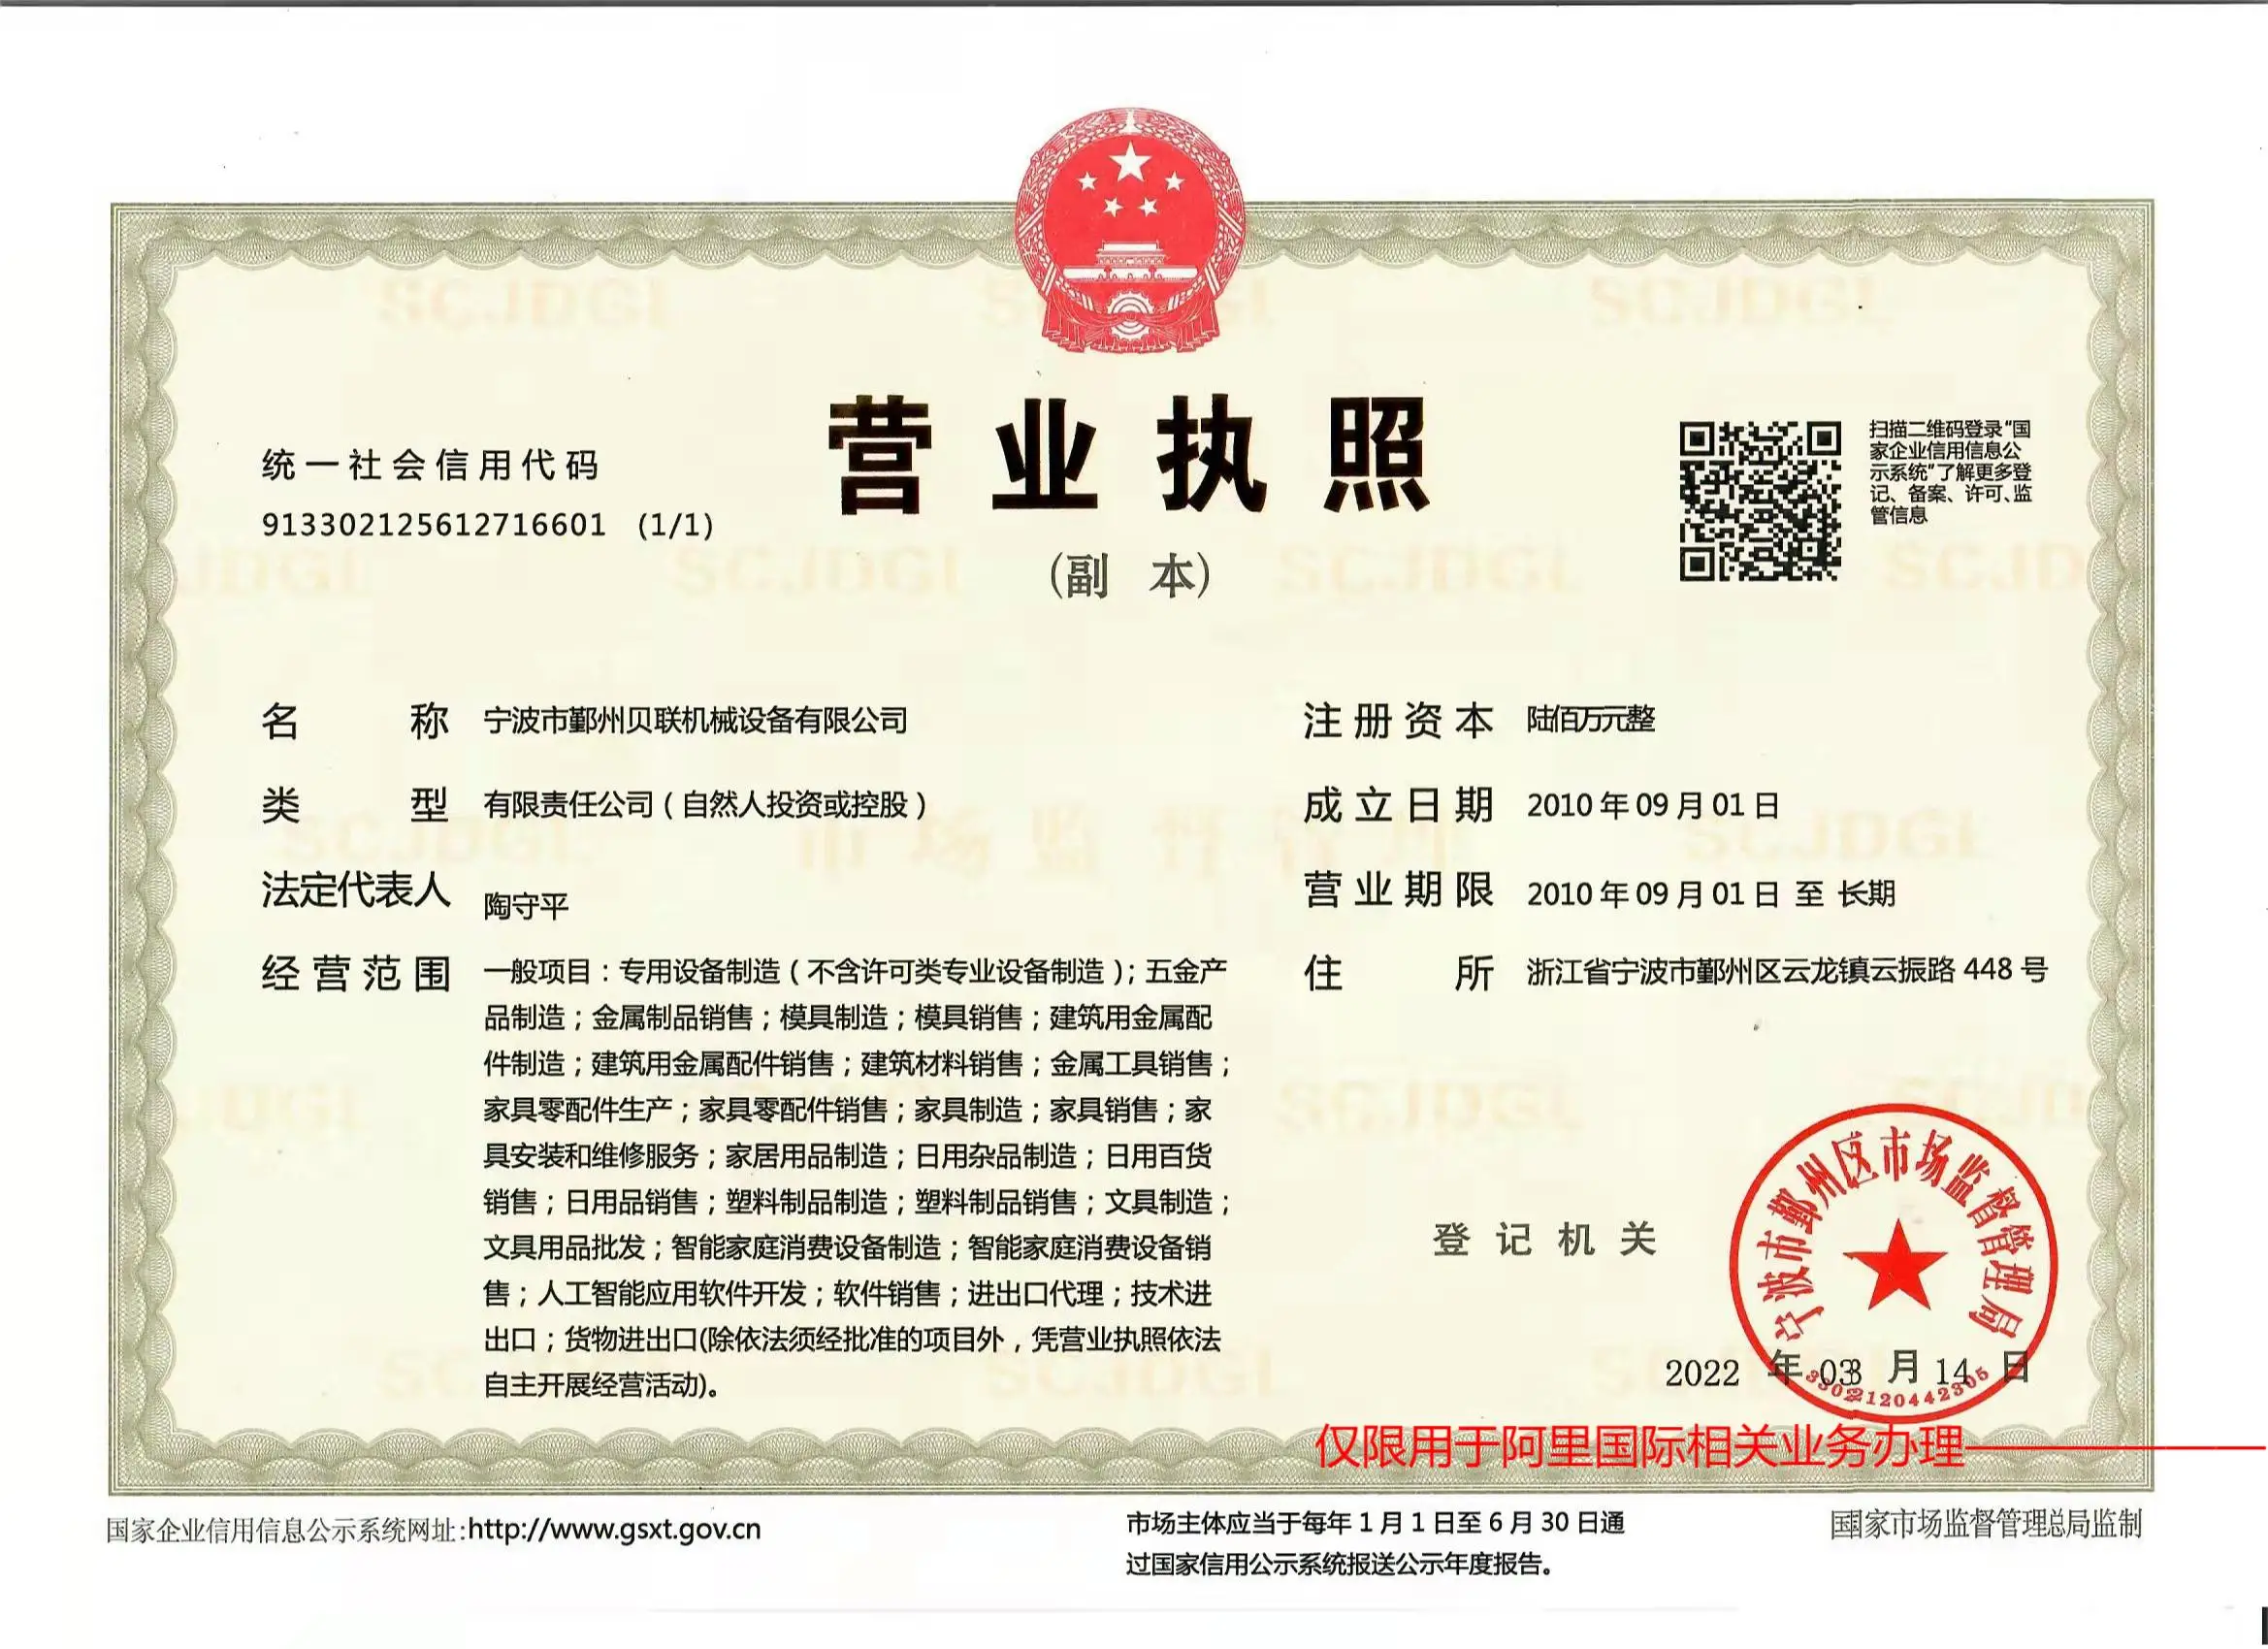 Company Overview - Ningbo Yinzhou Beilian Machinery And Equipment Co., Ltd.